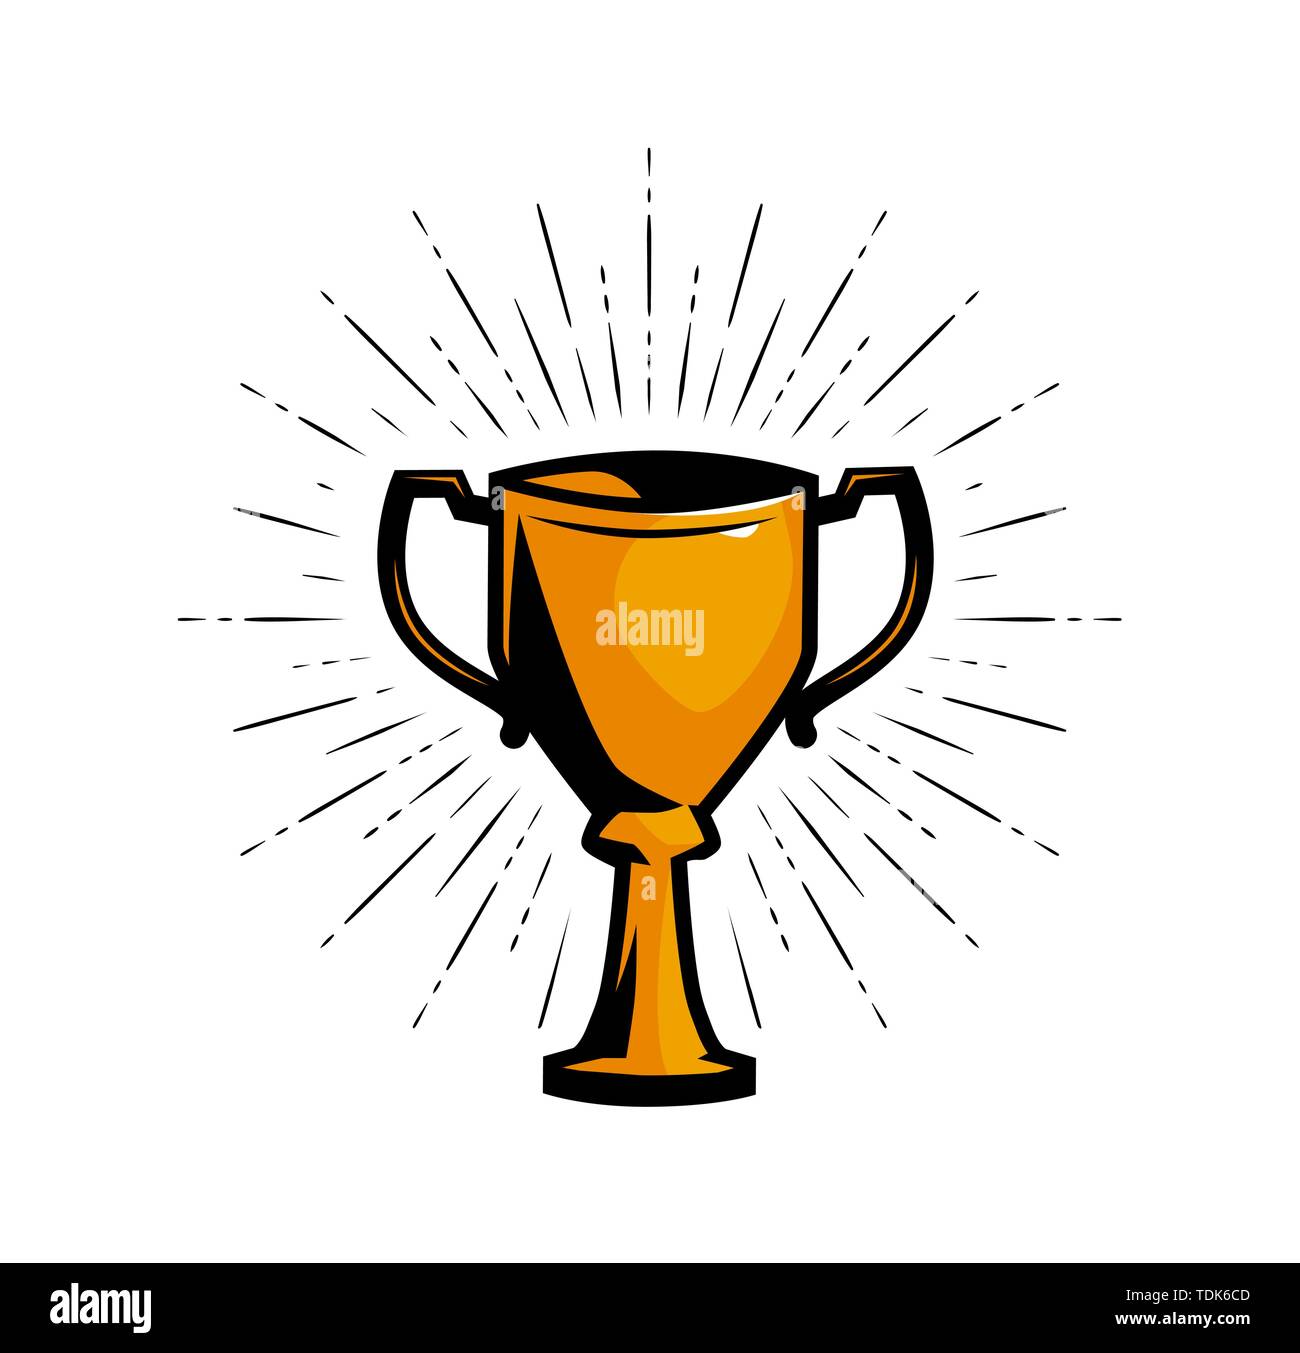 Gold cup winner, achievement award vector illustration Stock Vector